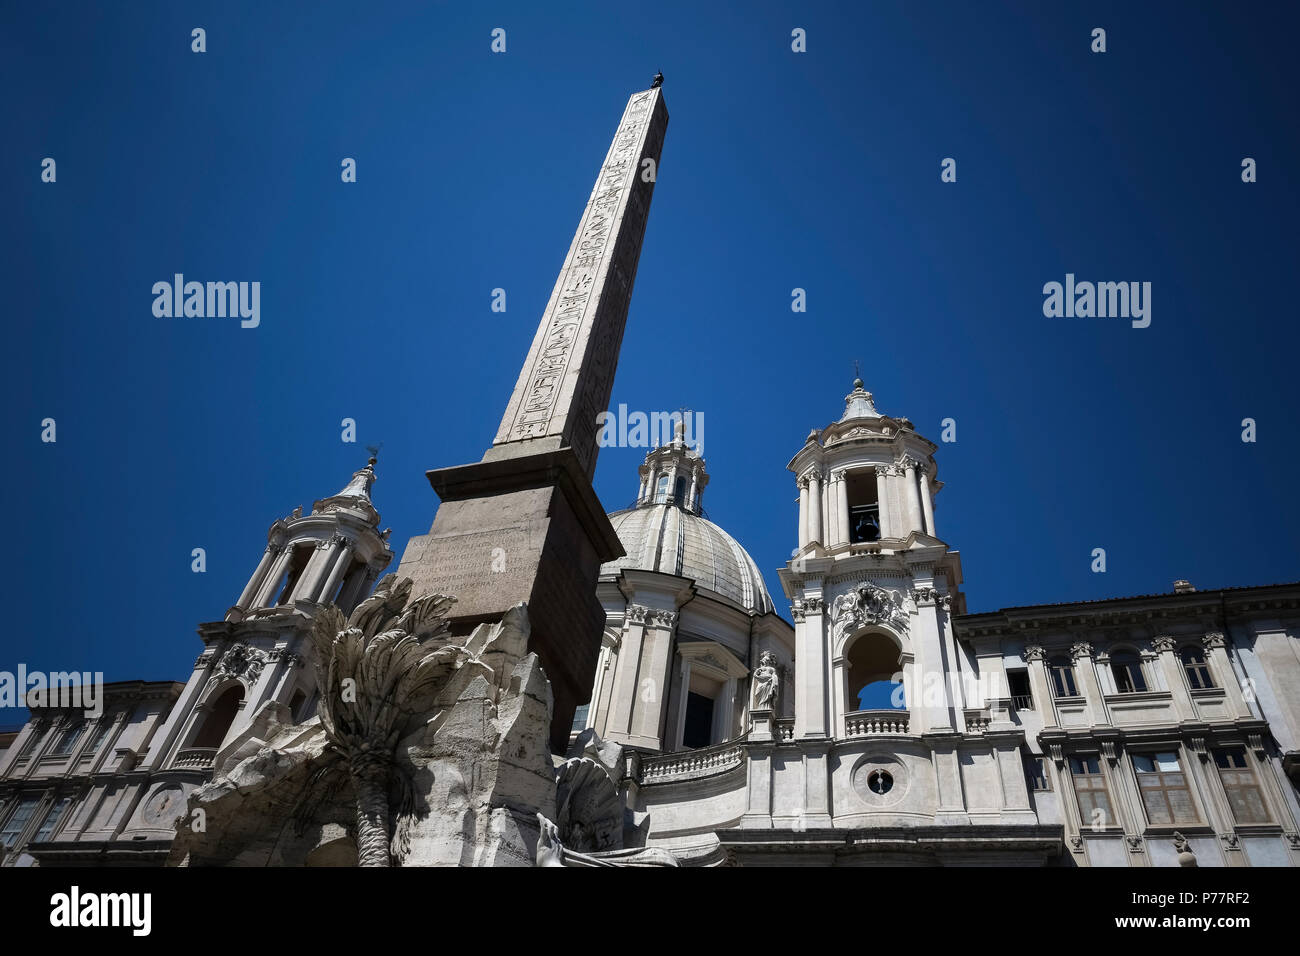 Piazza Navona Square, Bernini's 4 Rivers Fountain and Egyptian obelisk in front of Borromini's Saint Agnese in Agone church. Rome, Italy, Europe, EU. Stock Photo